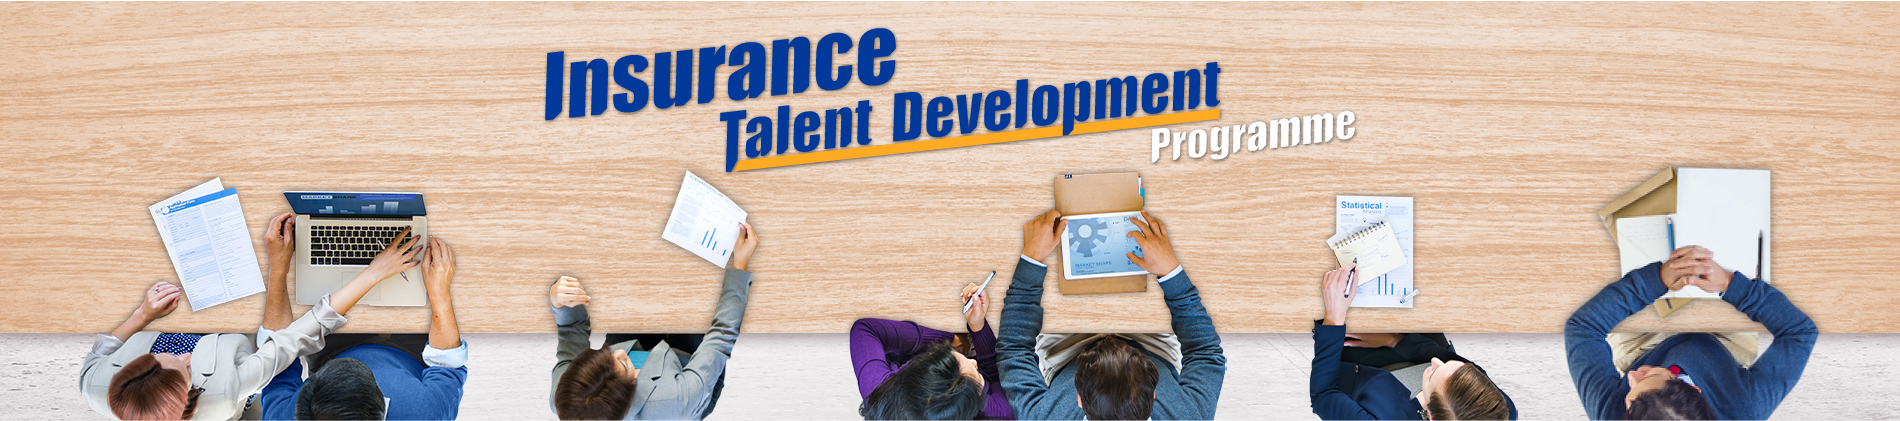 Insurance Talent Development Programme